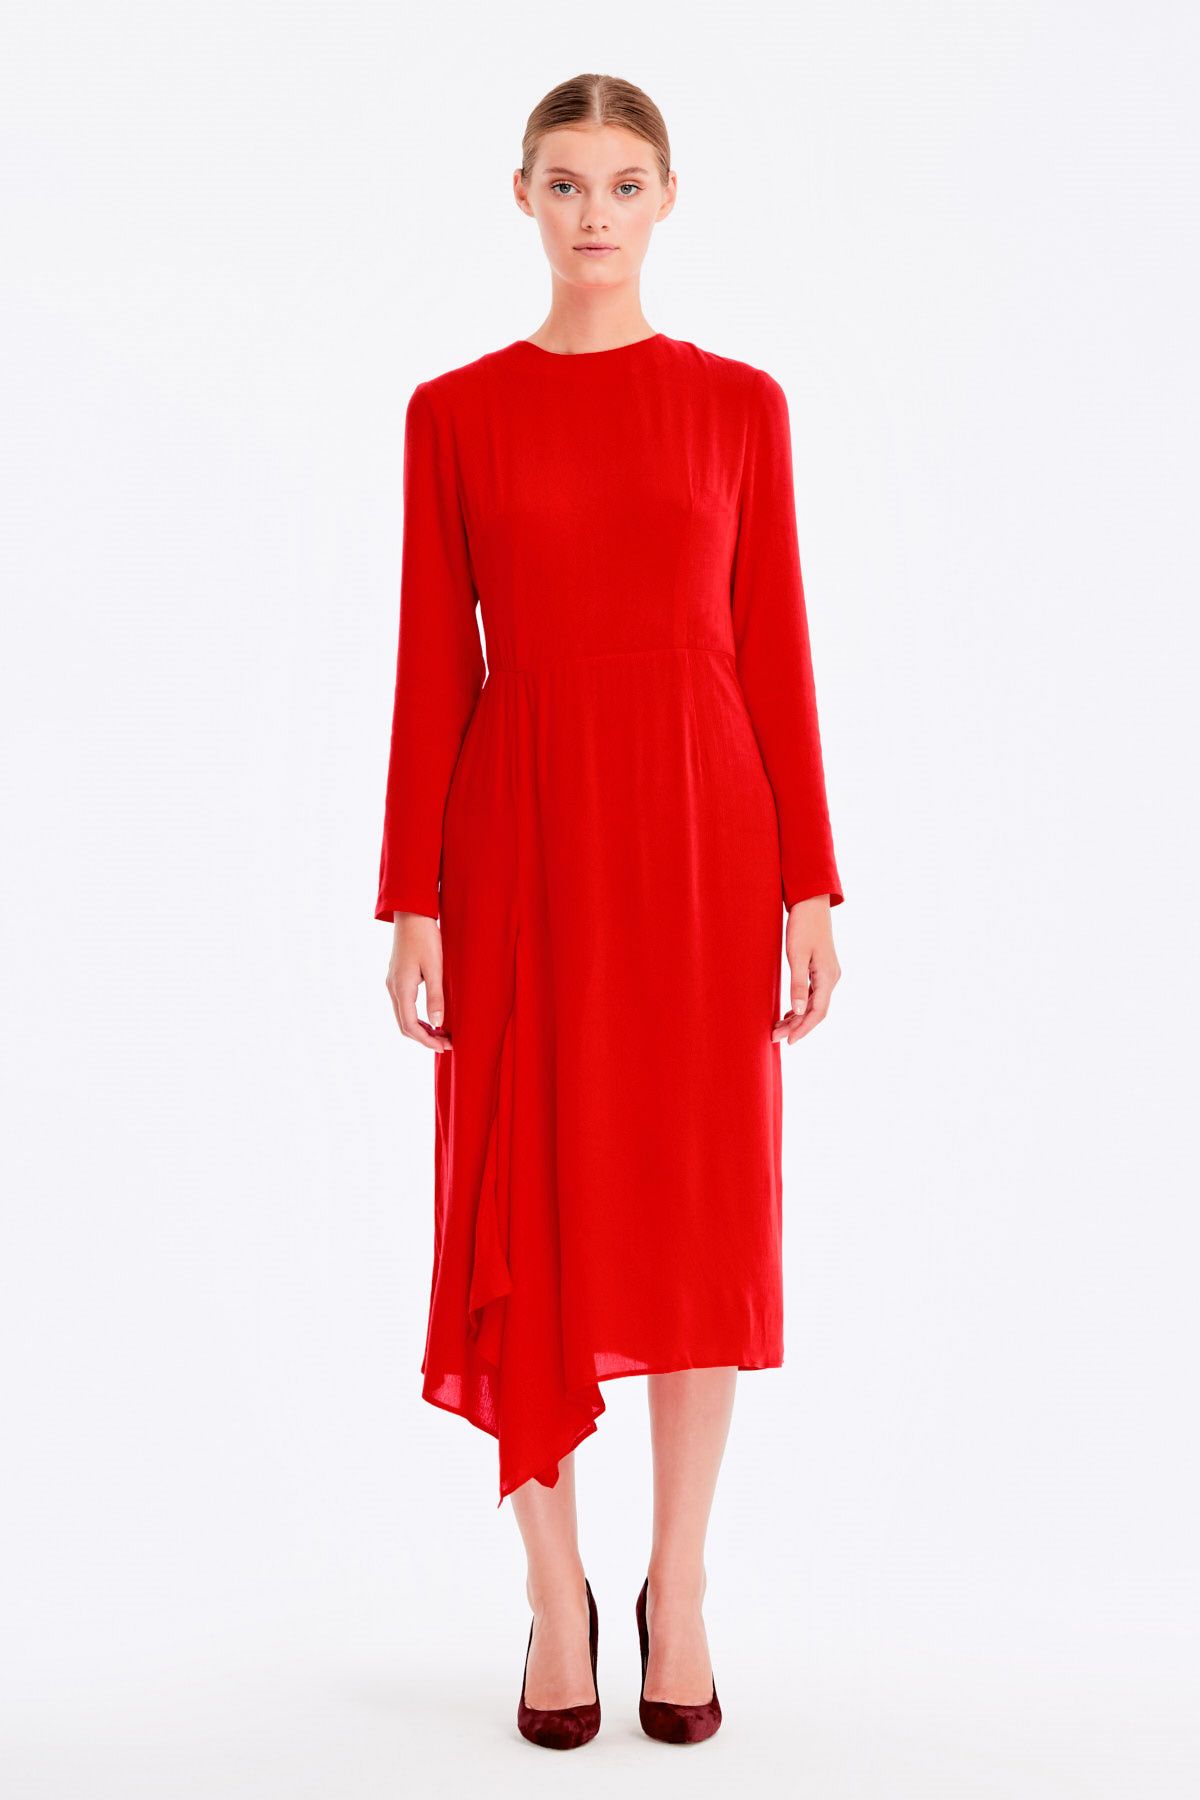 Midi red dress , photo 3